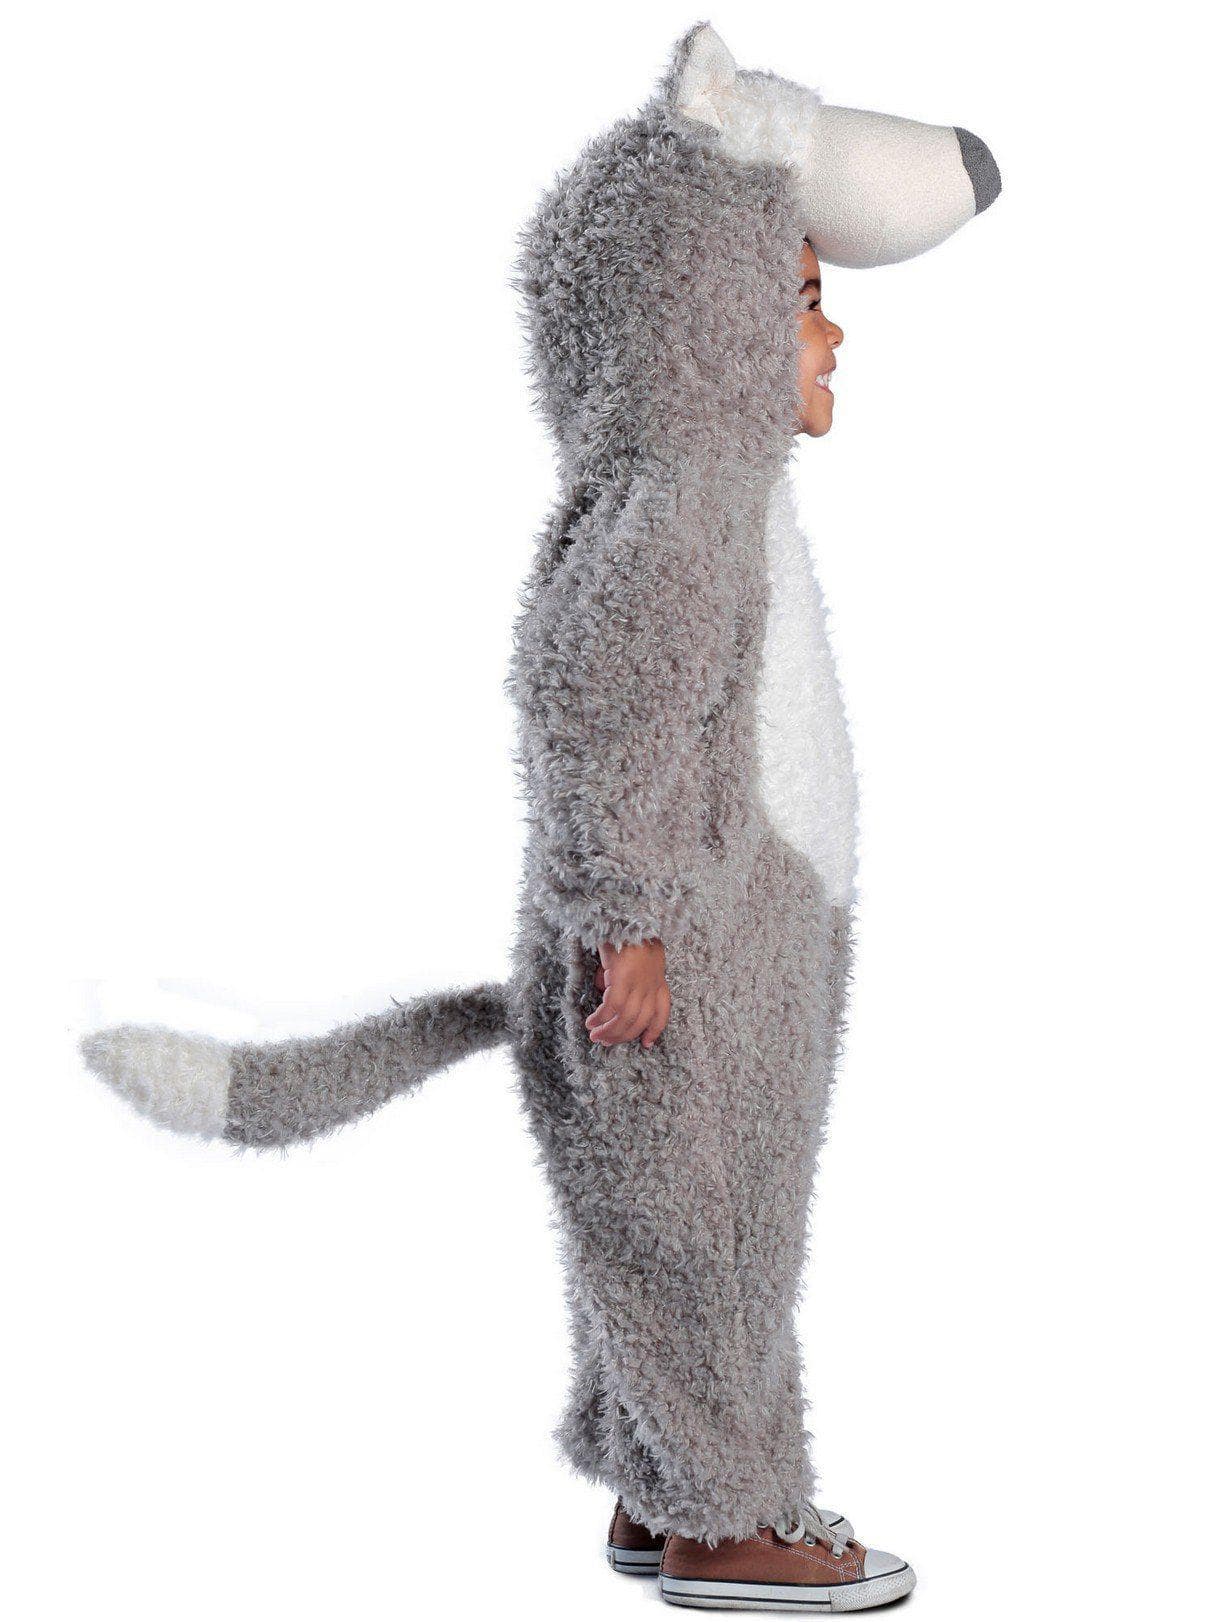 Kid's Big Bad Wolf Costume - costumes.com